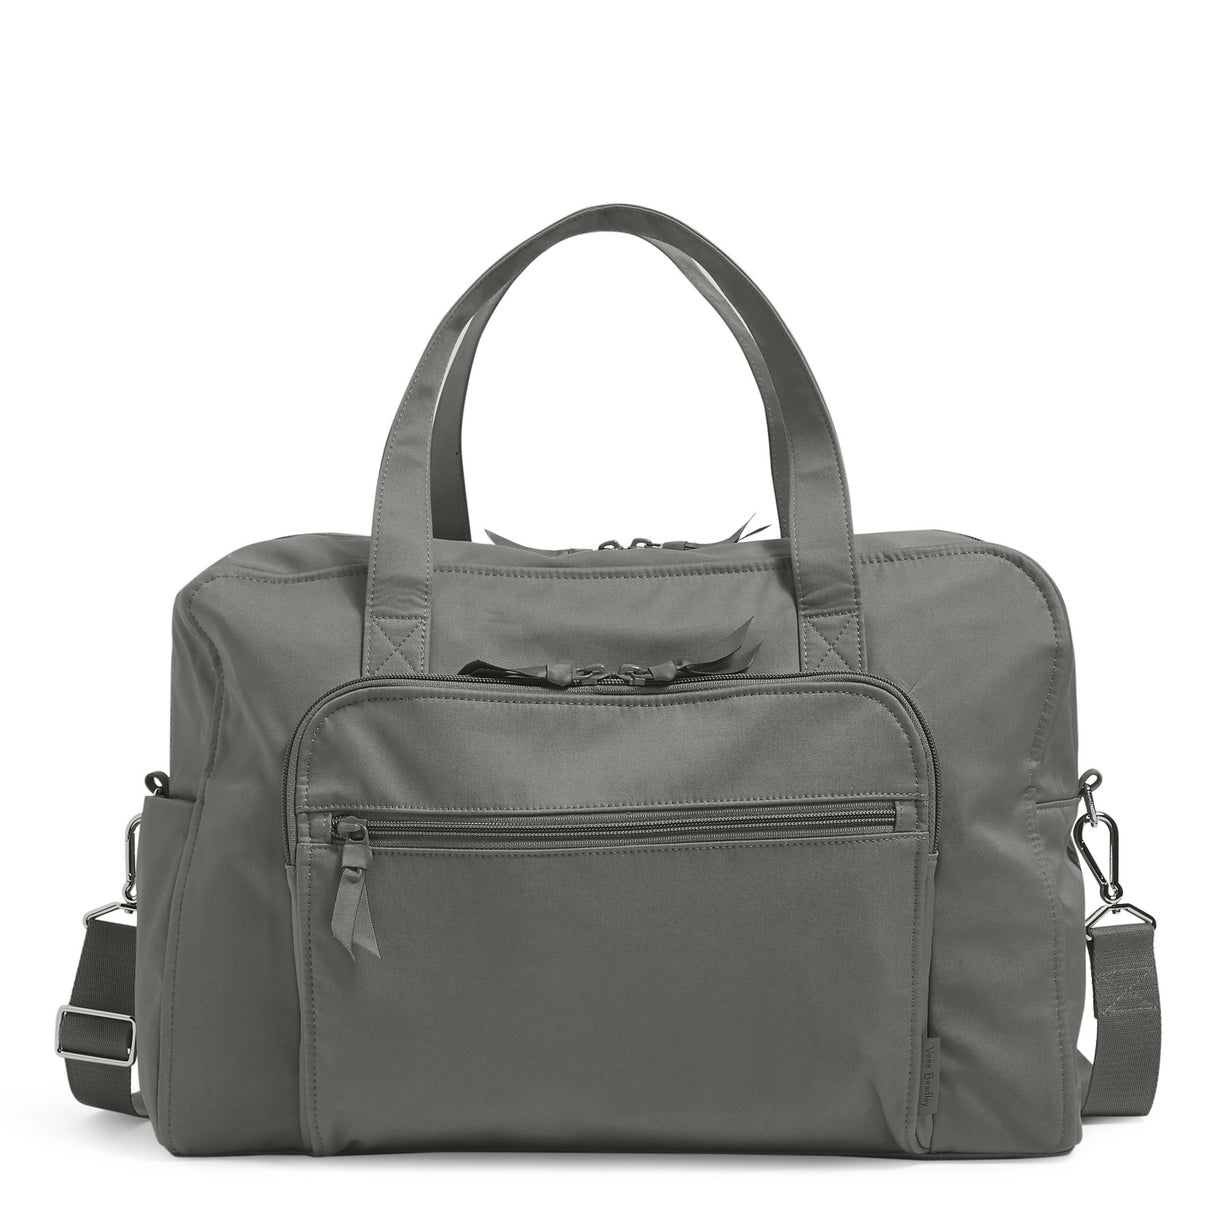 Vera Bradley Weekender Travel Bag - Galaxy Gray